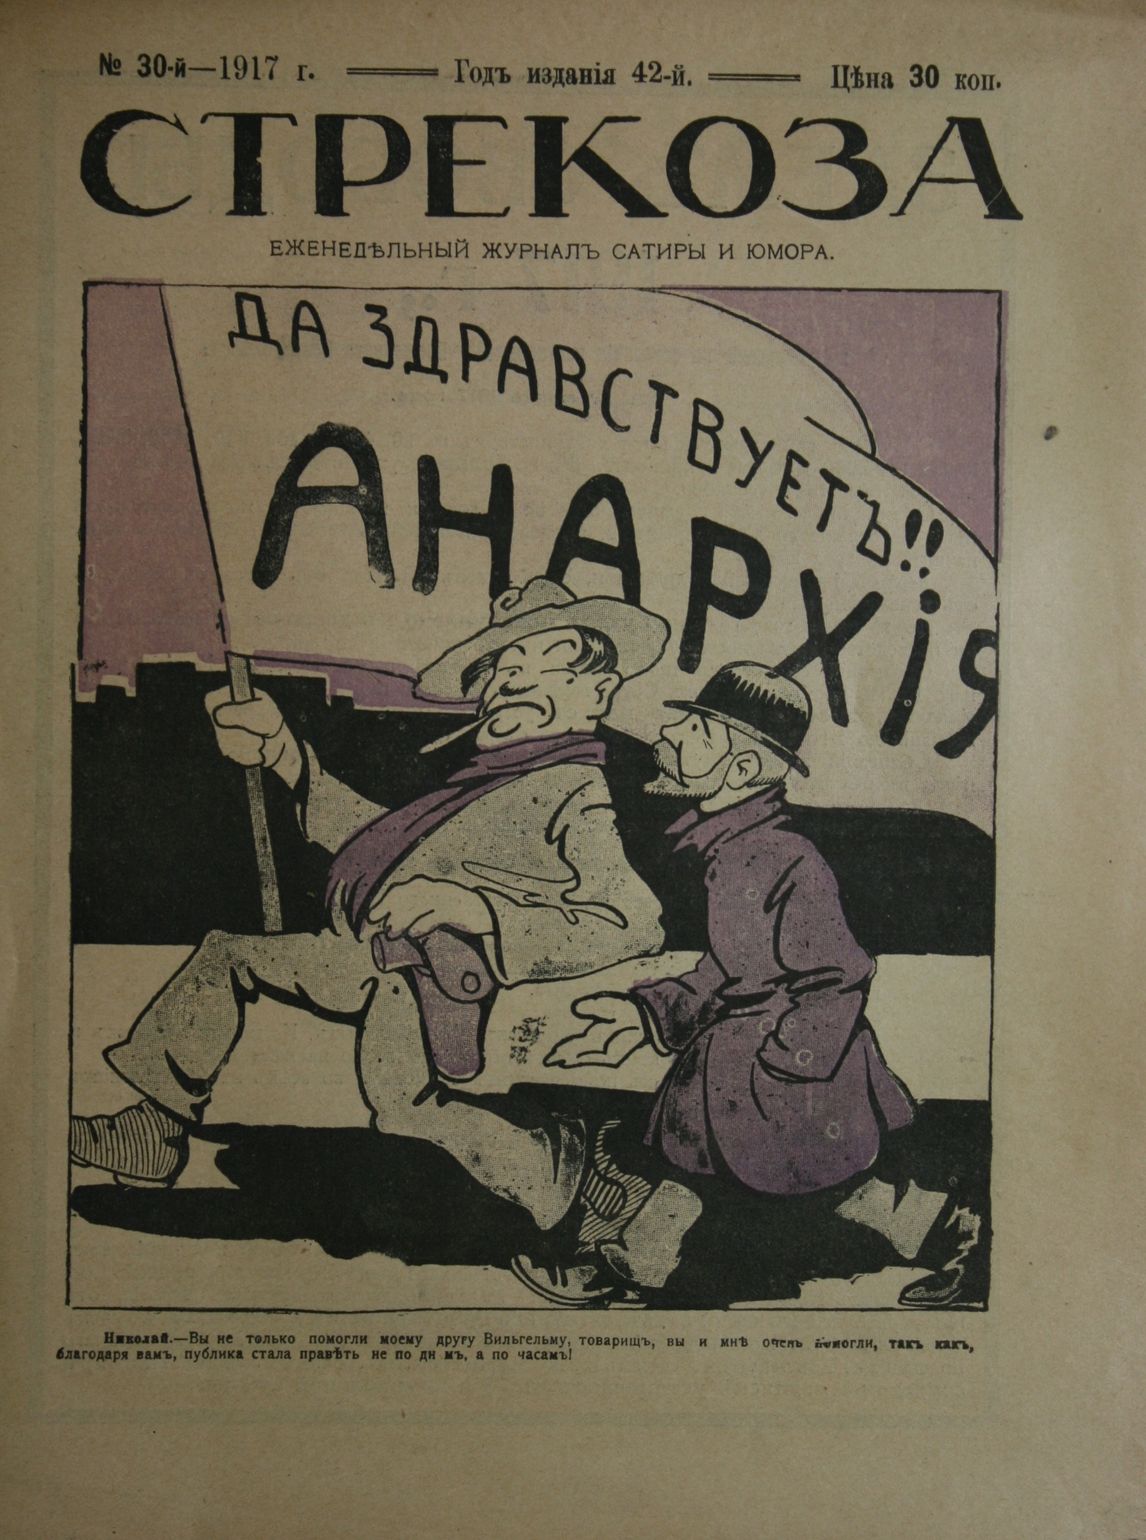 strekosa_1917_3